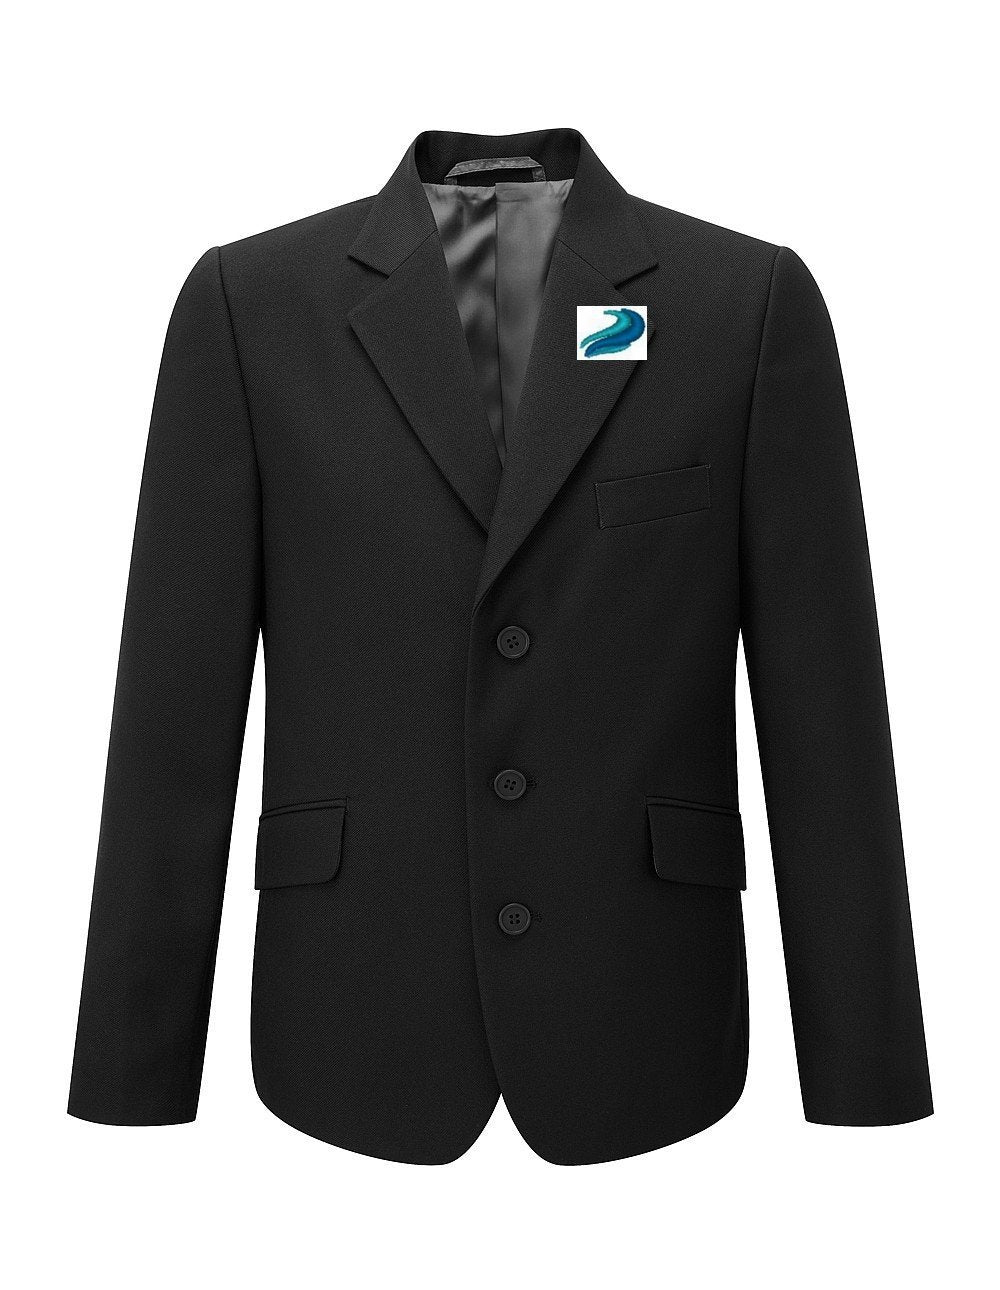 Chase High - Boys Designer Jacket with School Logo - Schoolwear Centres | School Uniform Centres